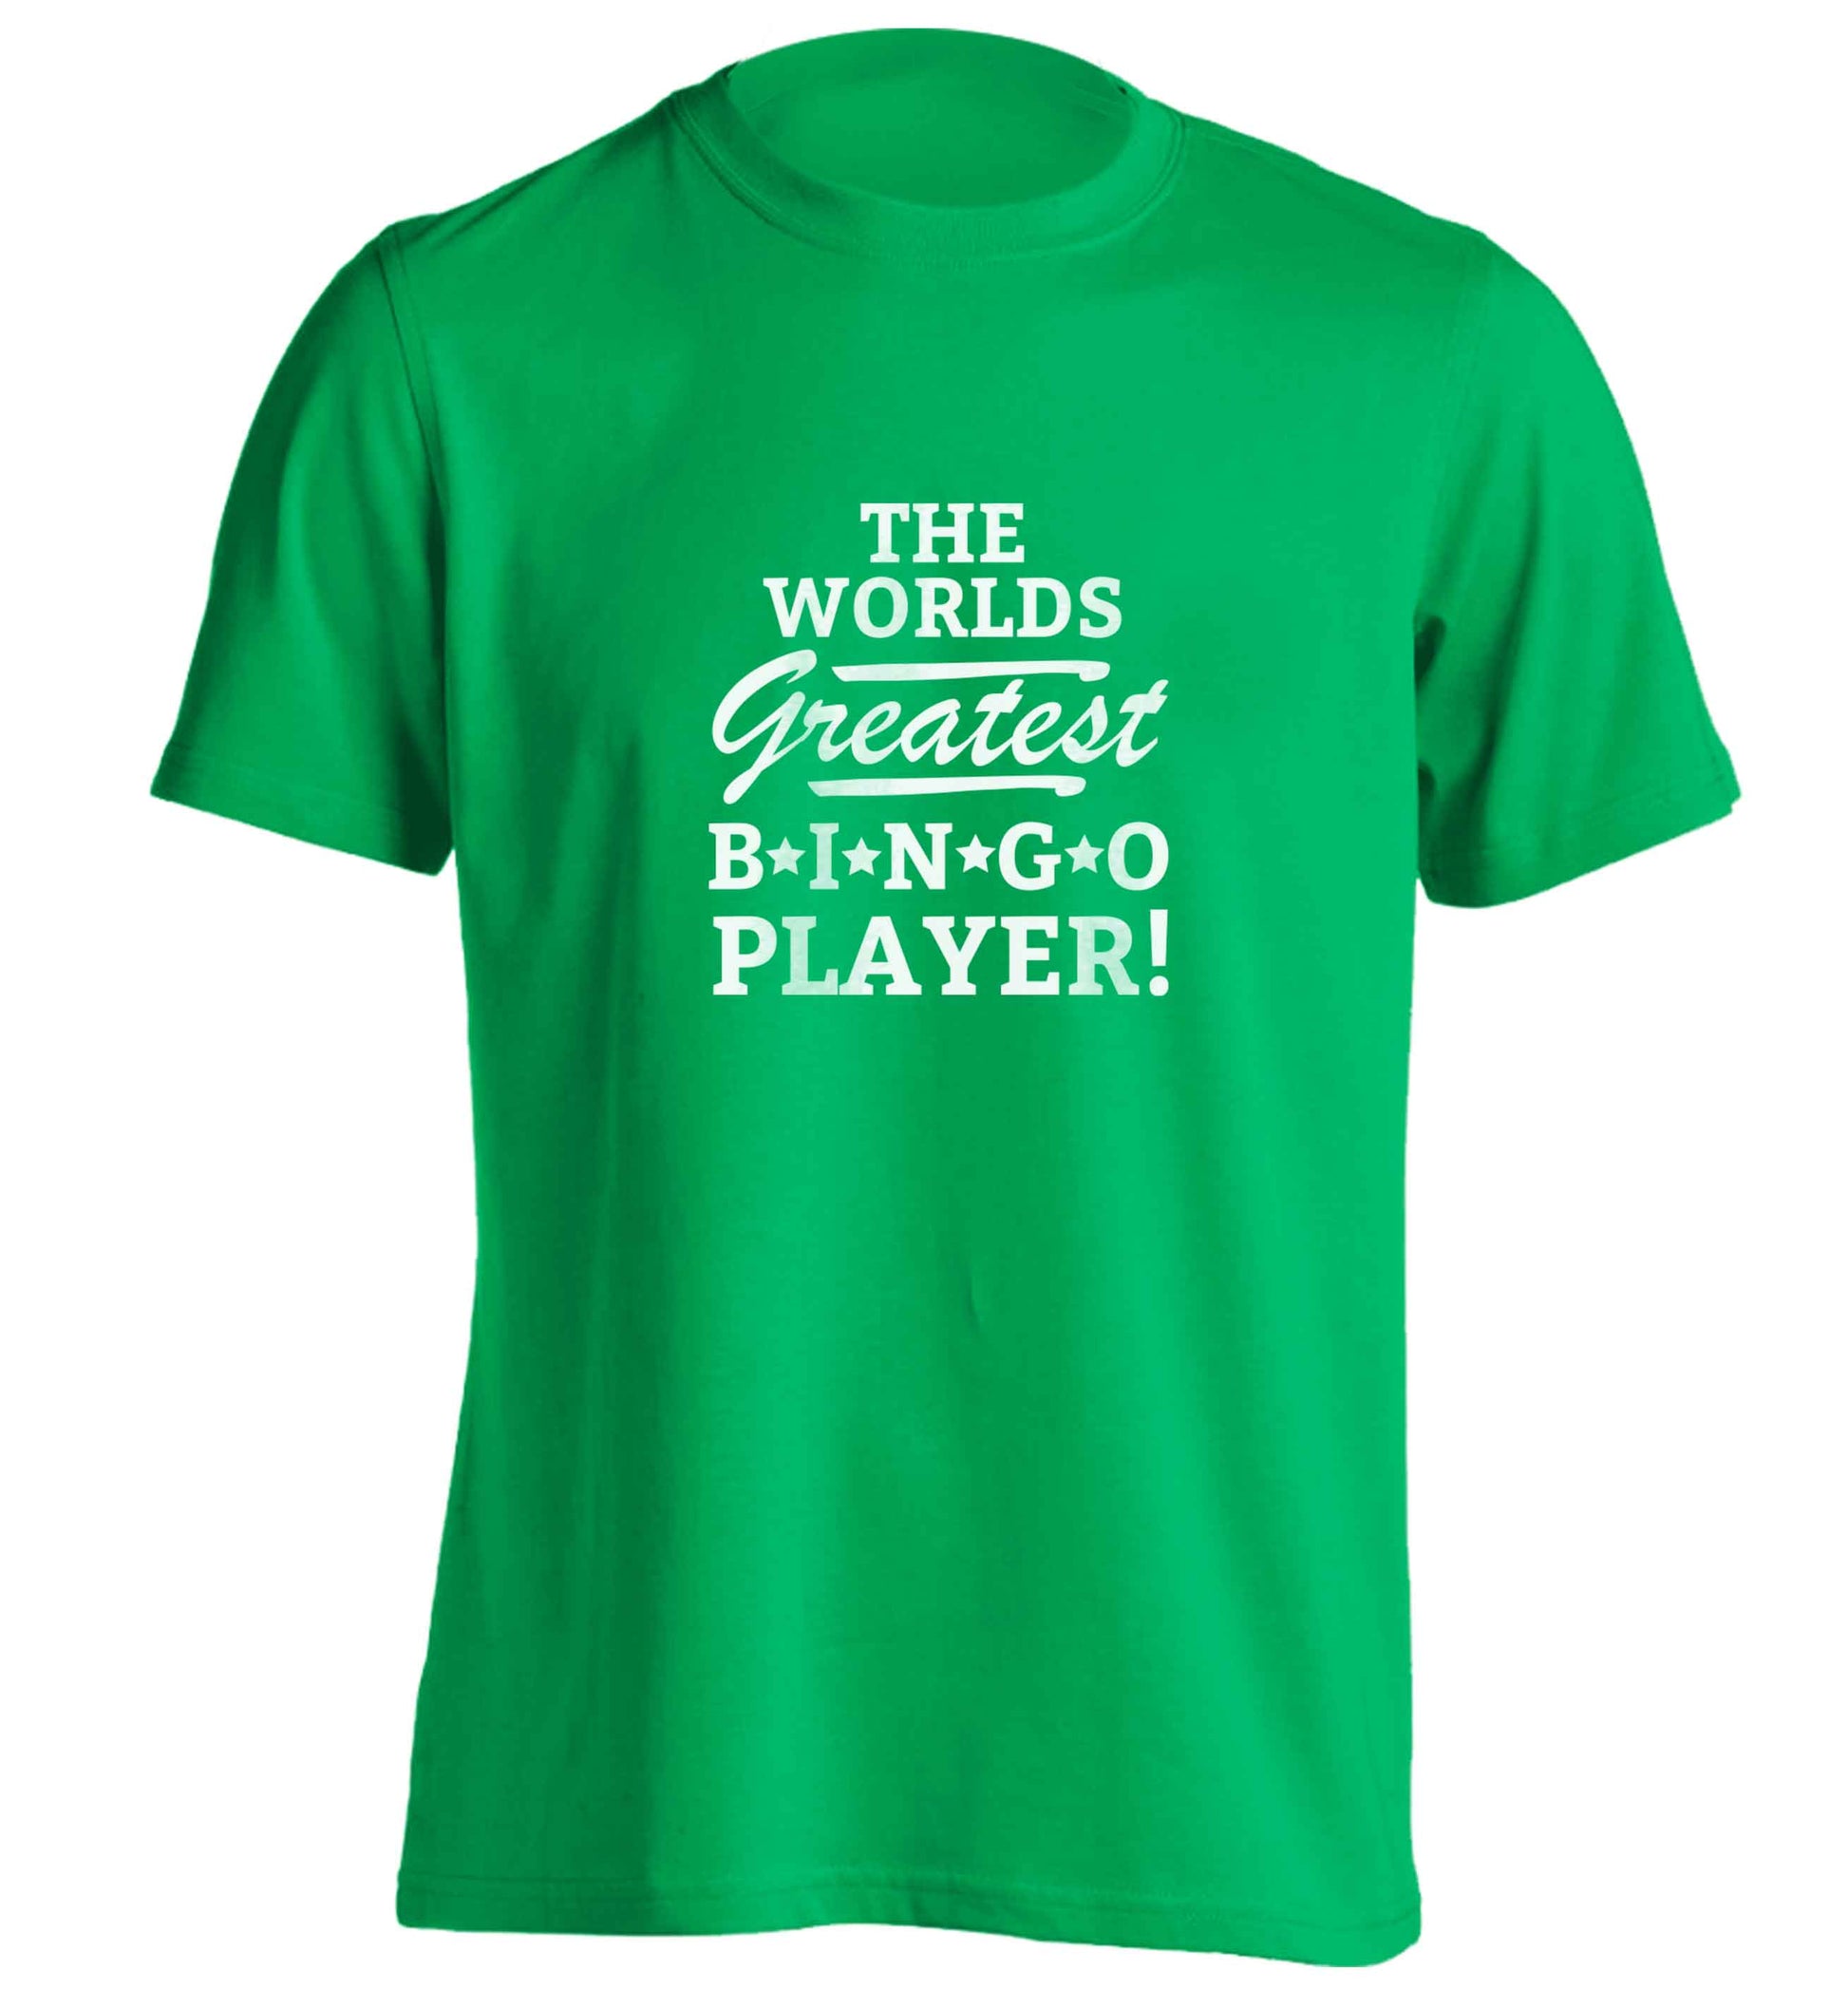 Worlds greatest bingo player adults unisex green Tshirt 2XL